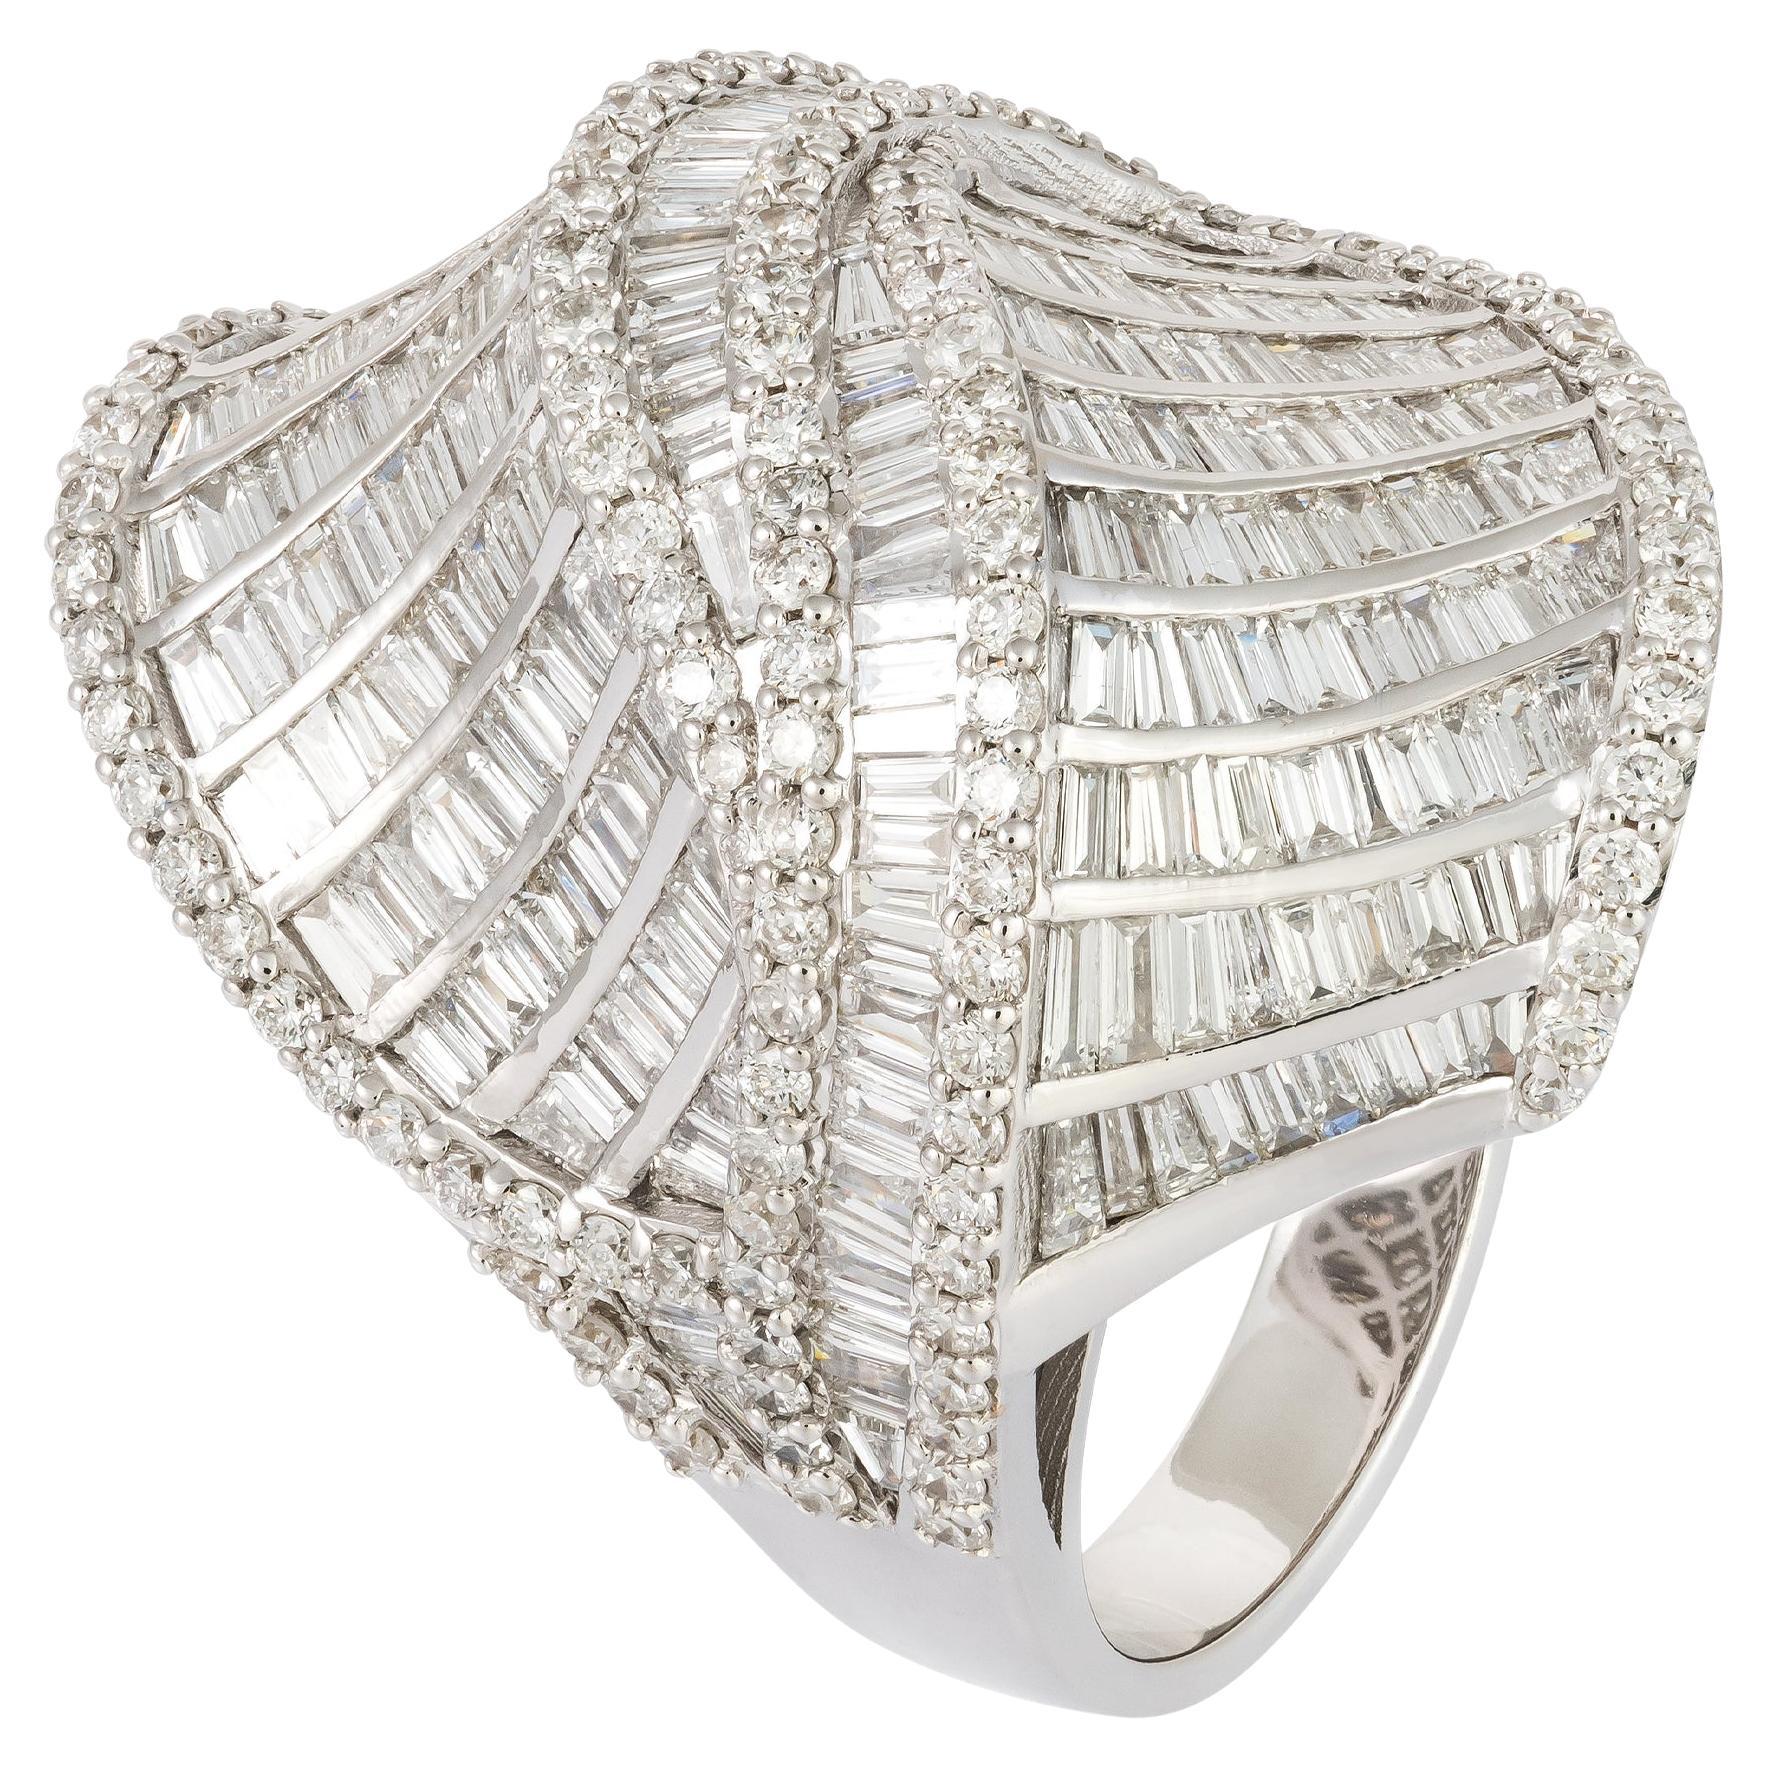 Unique White 18K Gold White Diamond Ring for Her